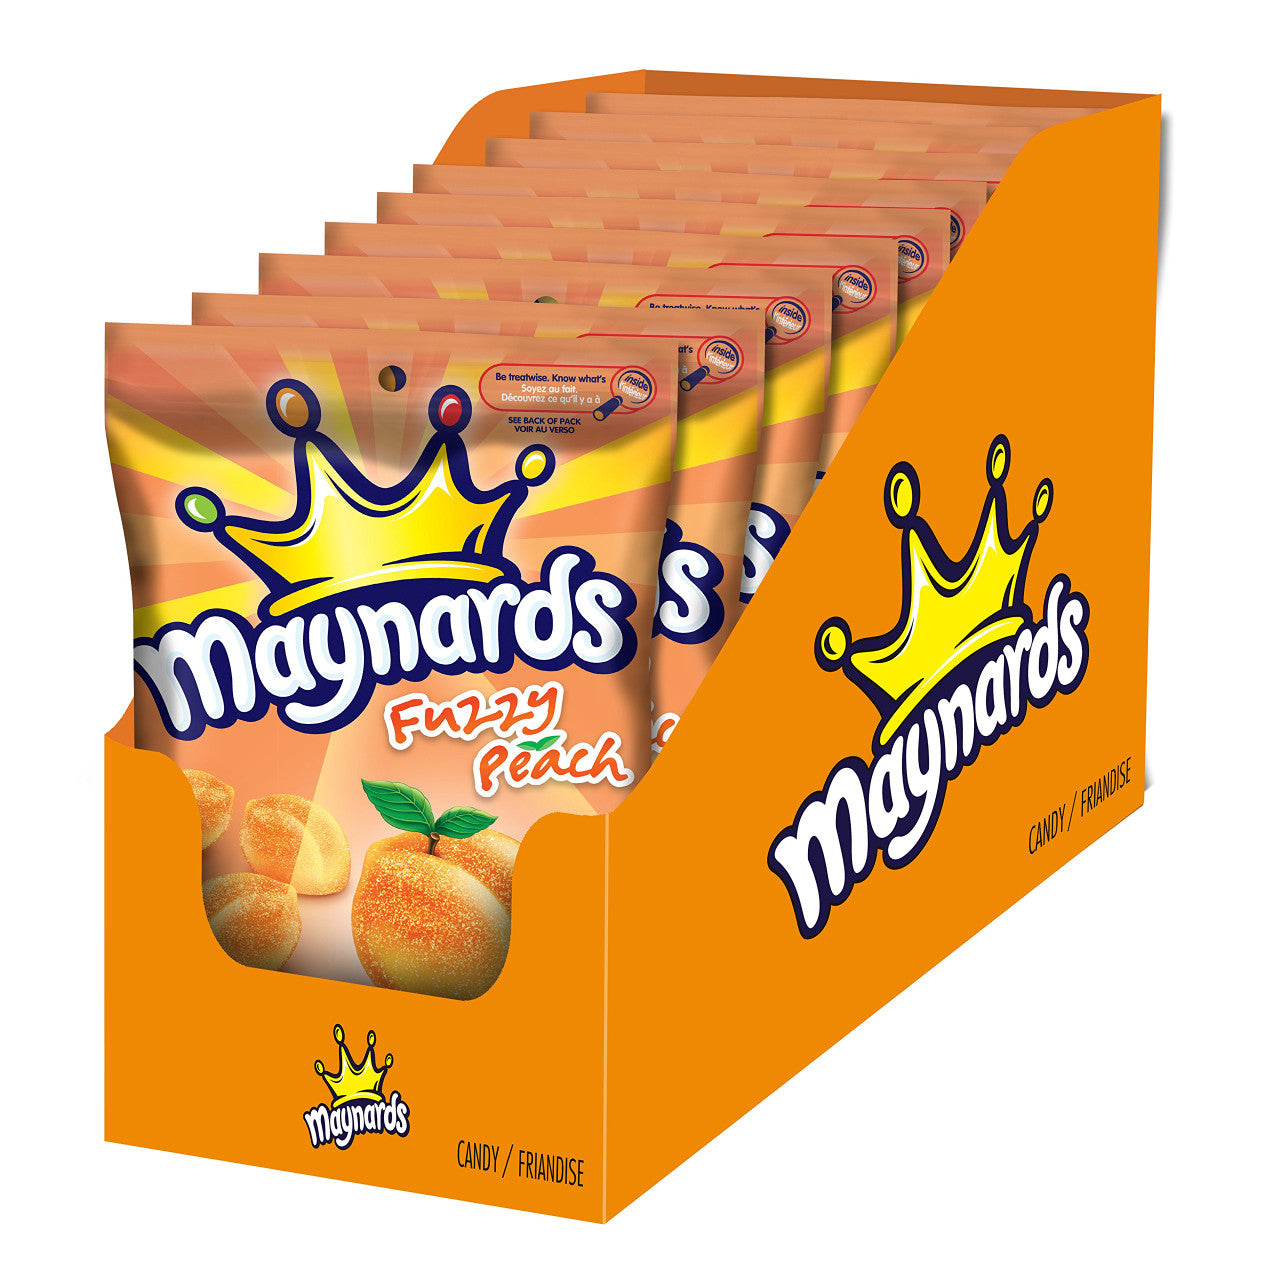 Maynards Fuzzy Peach, 185g/6.5 oz., 9pk {Imported from Canada}